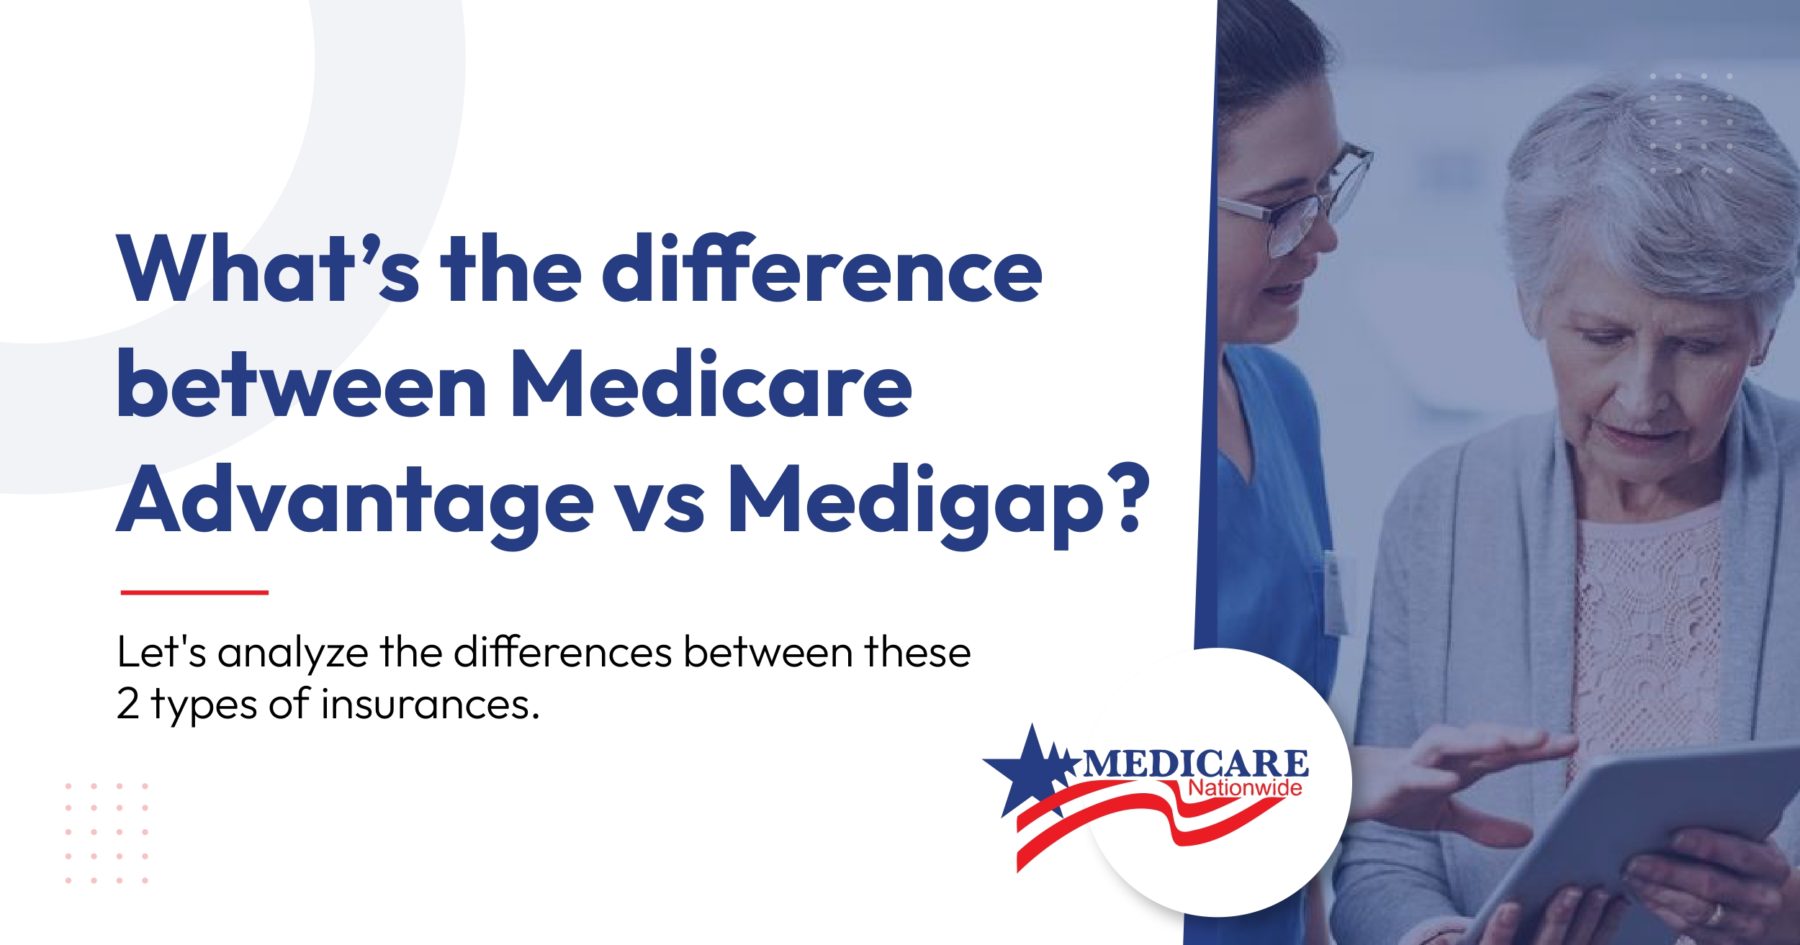 Medicare Advantage vs Medigap